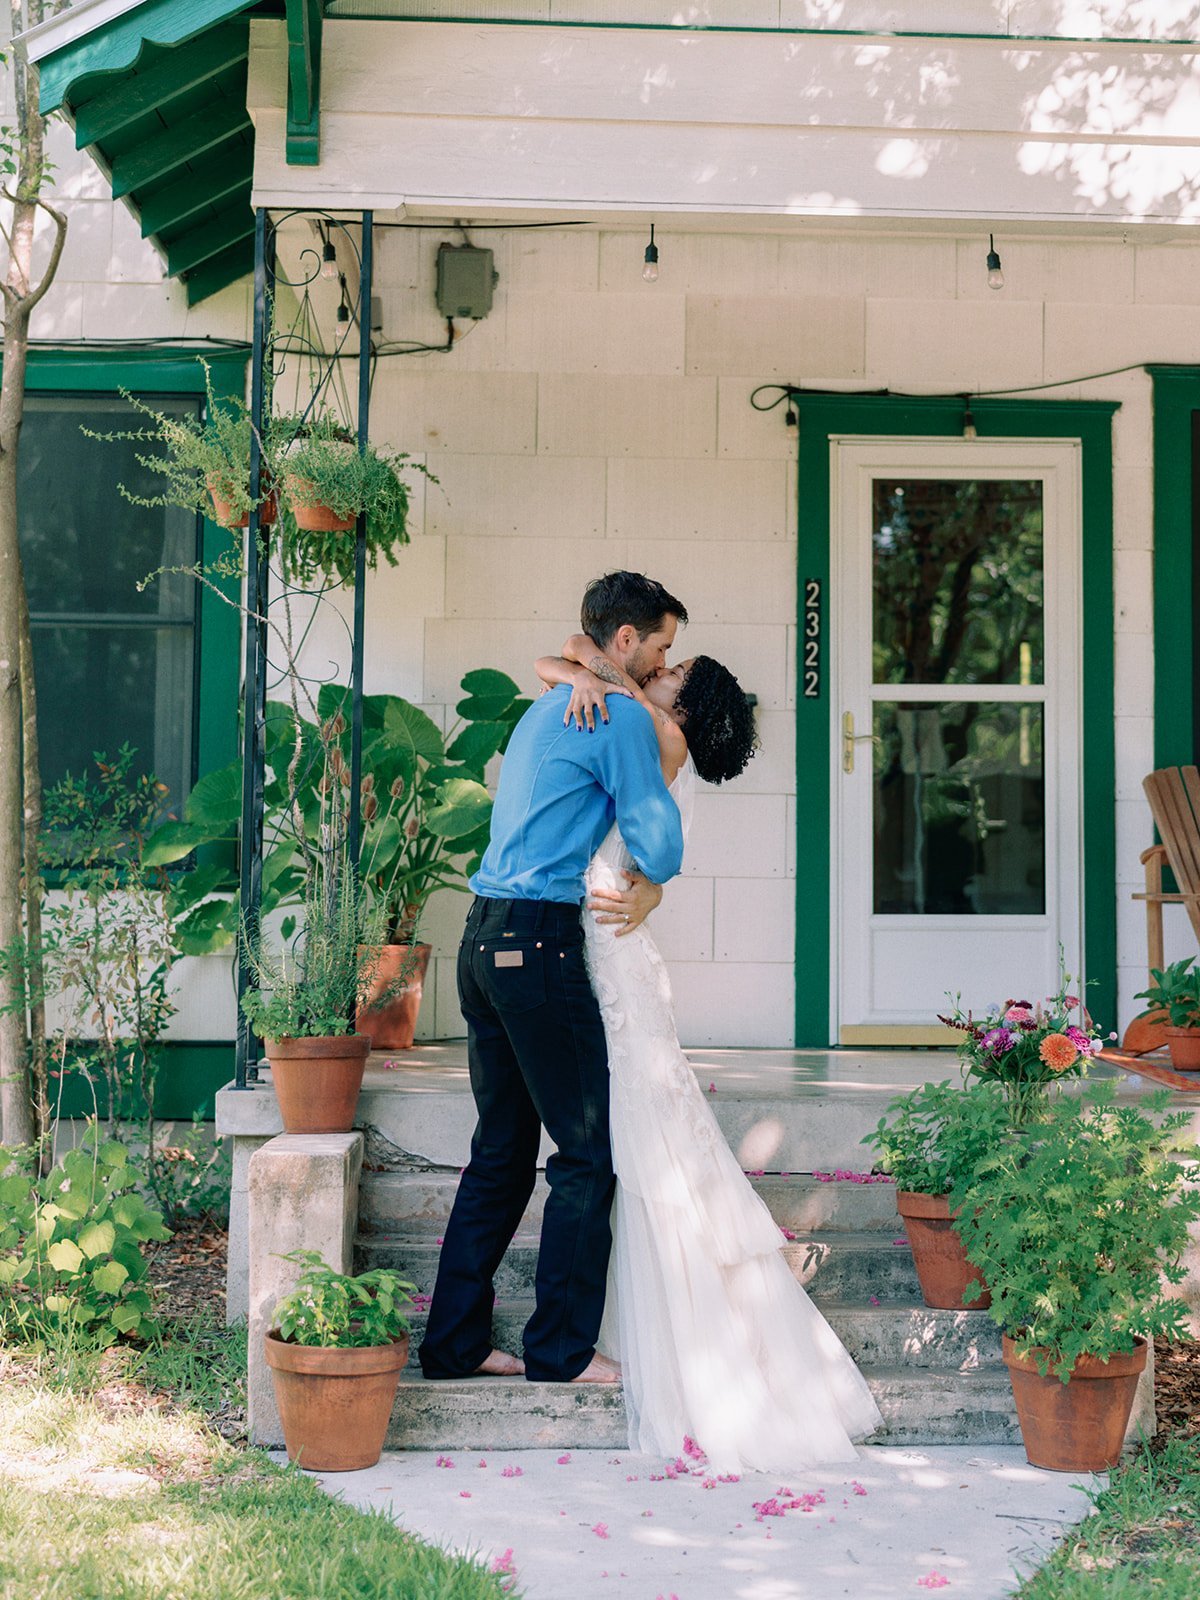 Best-Austin-Wedding-Photographers-Elopement-Film-35mm-Asheville-Santa-Barbara-19.jpg